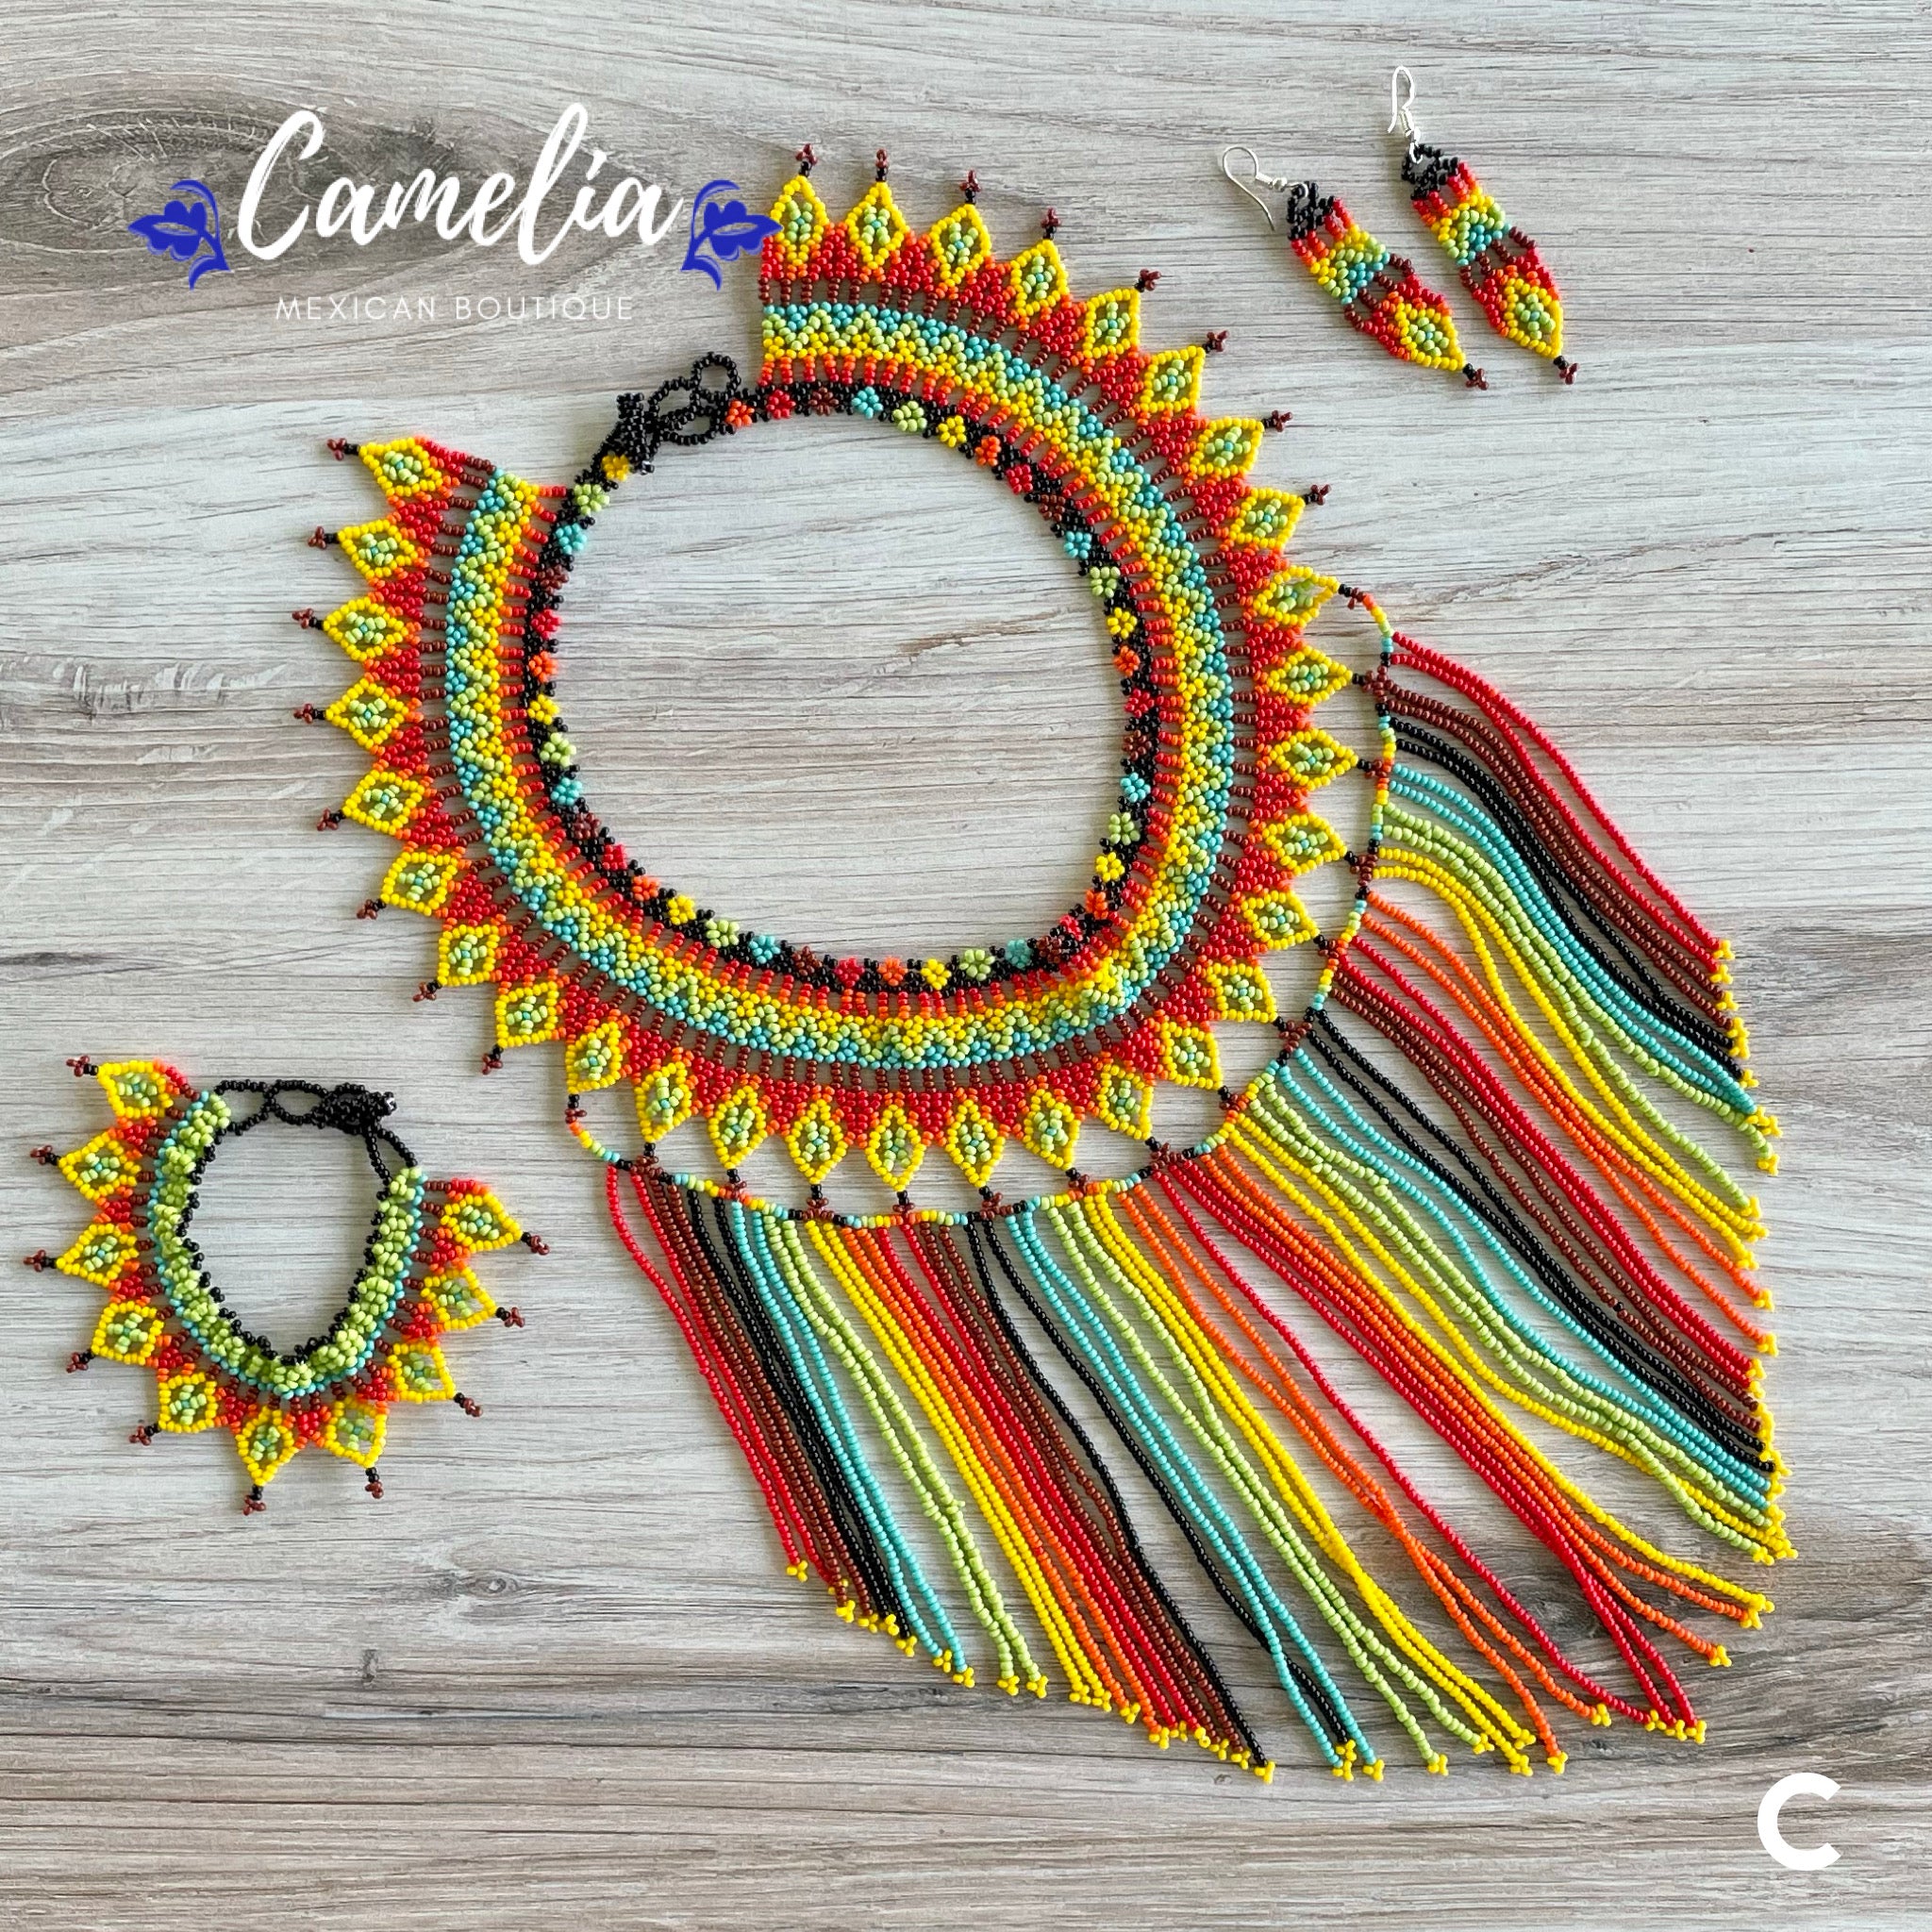 Flor Campanita Huichol Necklace & Earrings Set – GlamlindoArtesania